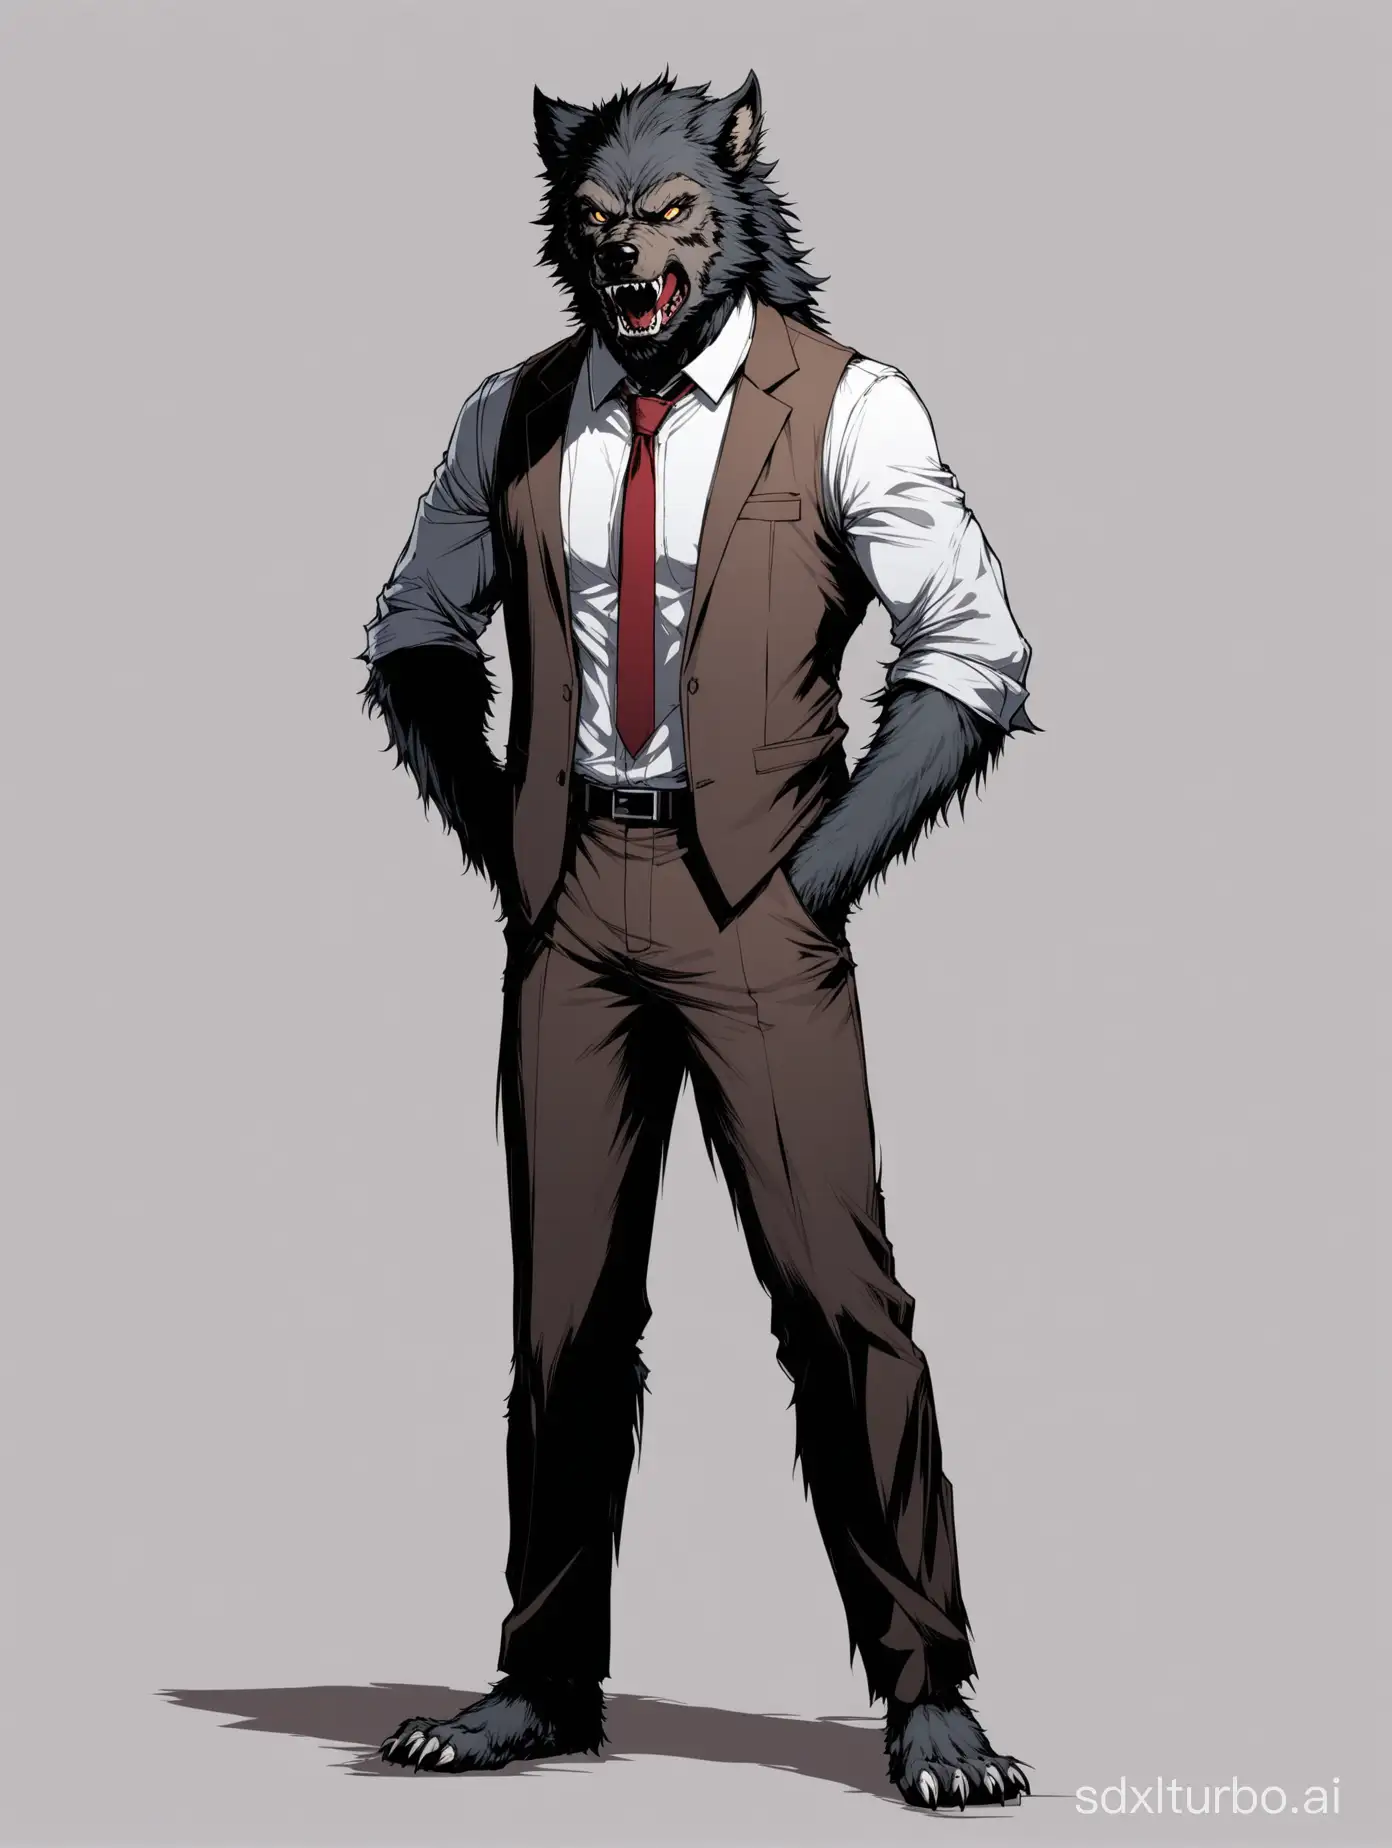 Werewolf-Office-Worker-Standing-Against-a-Blank-Background